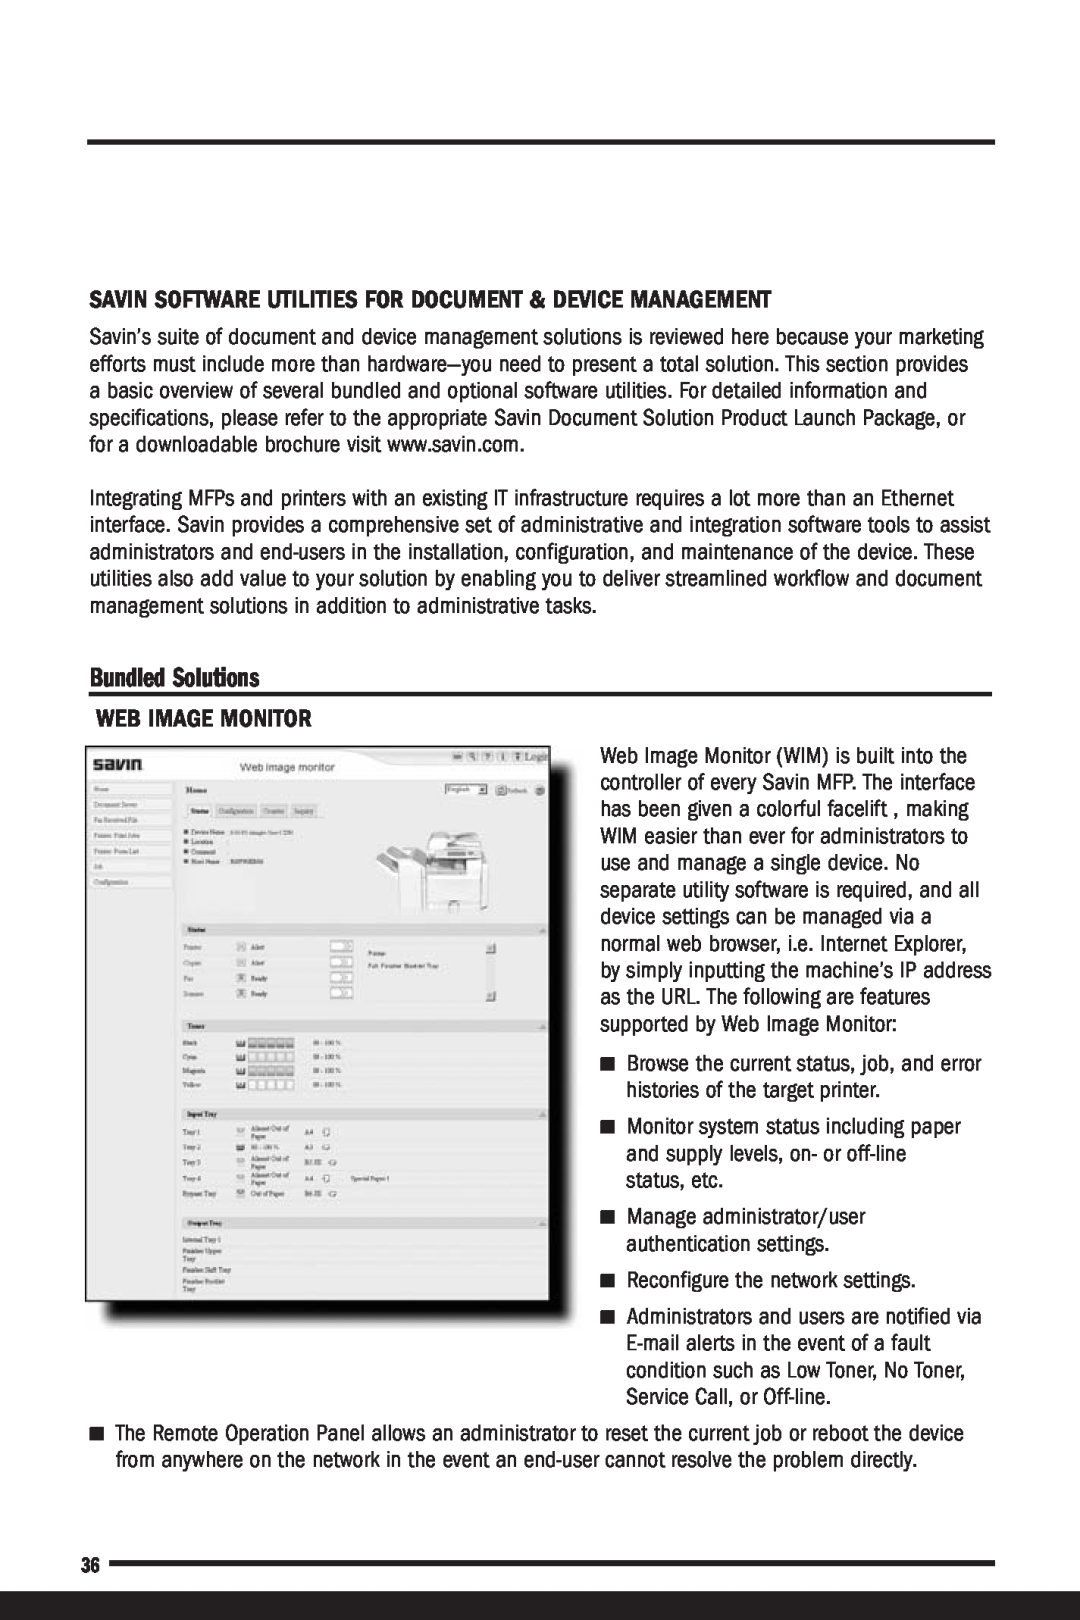 Savin C7570, C6055 manual Bundled Solutions, Savin Software Utilities For Document & Device Management, Web Image Monitor 